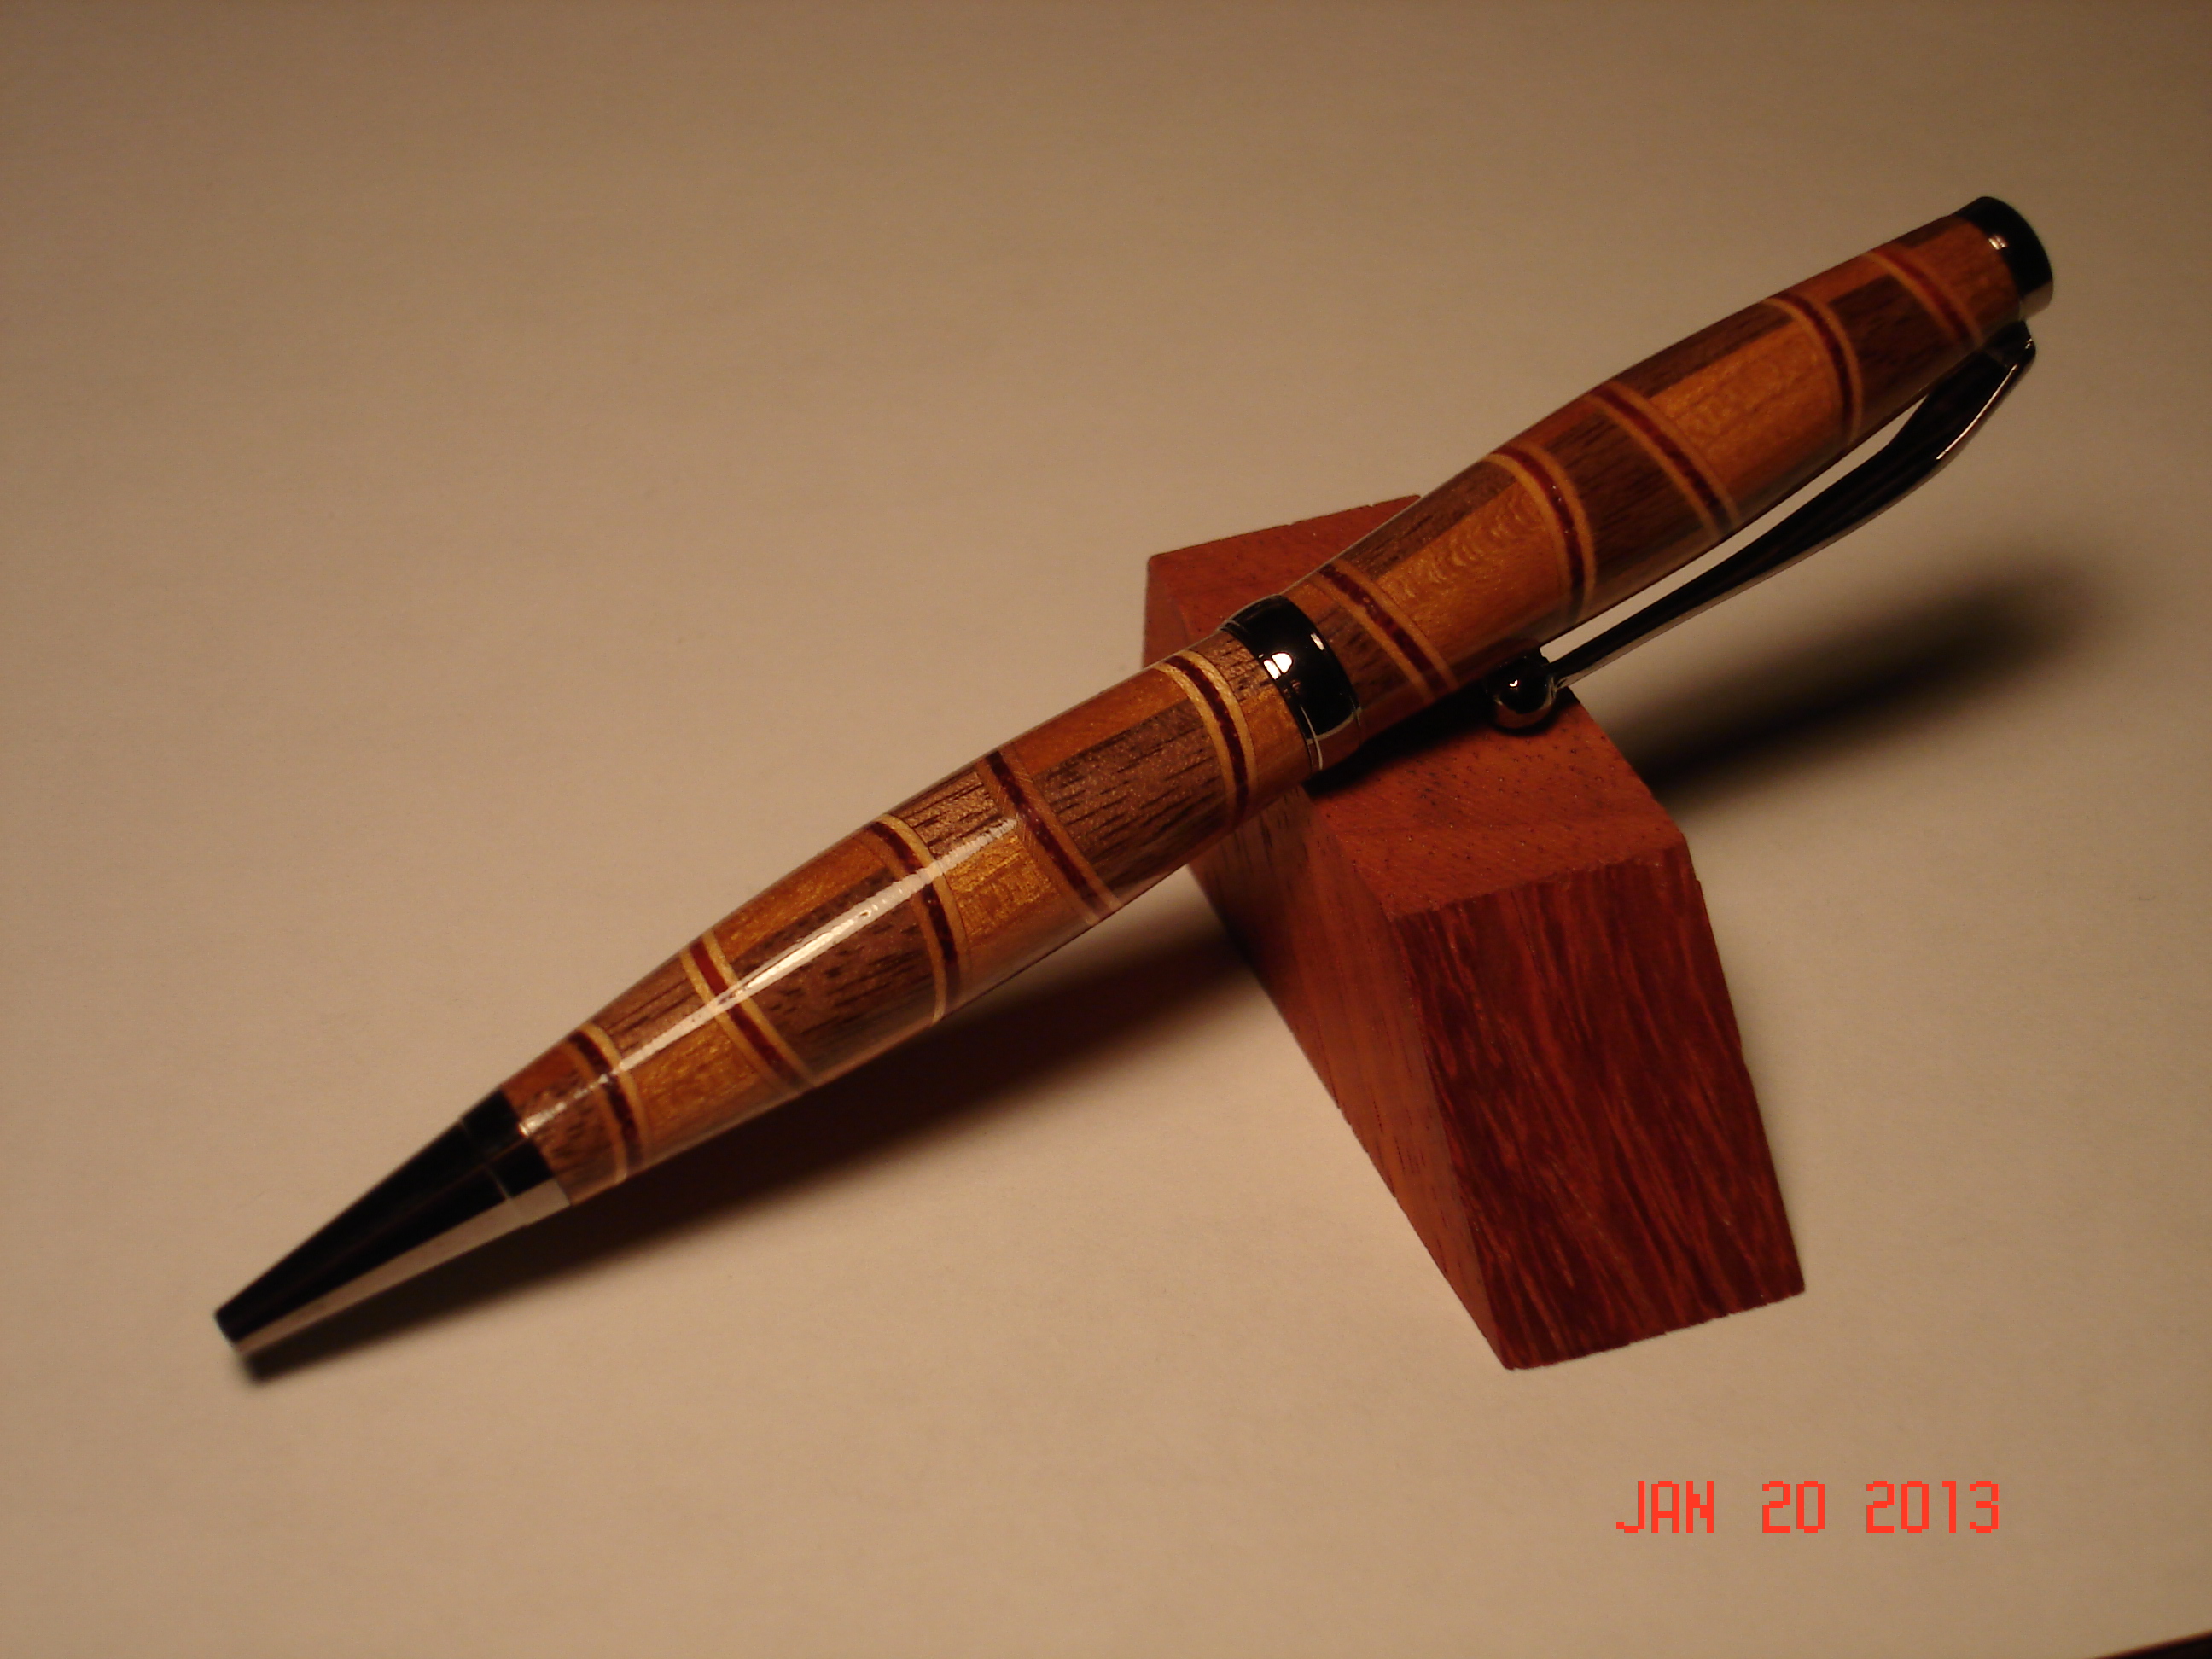 Walnut / Cherry segmented pen with titanium hardware